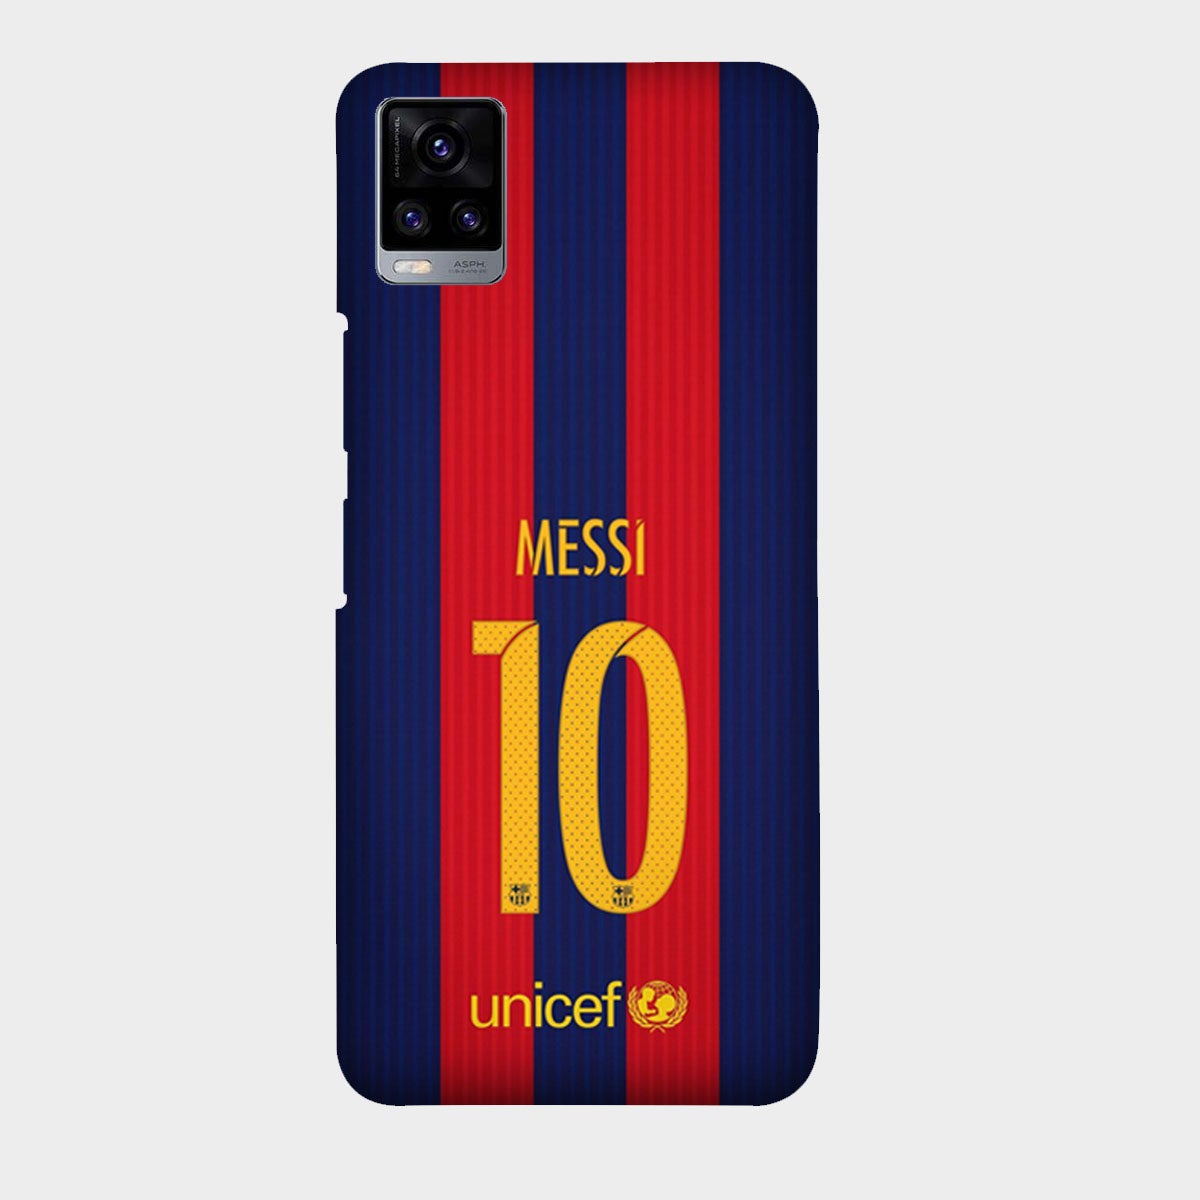 Lionel Messi Shirt - FC Barcelona - Mobile Phone Cover - Hard Case - Vivo